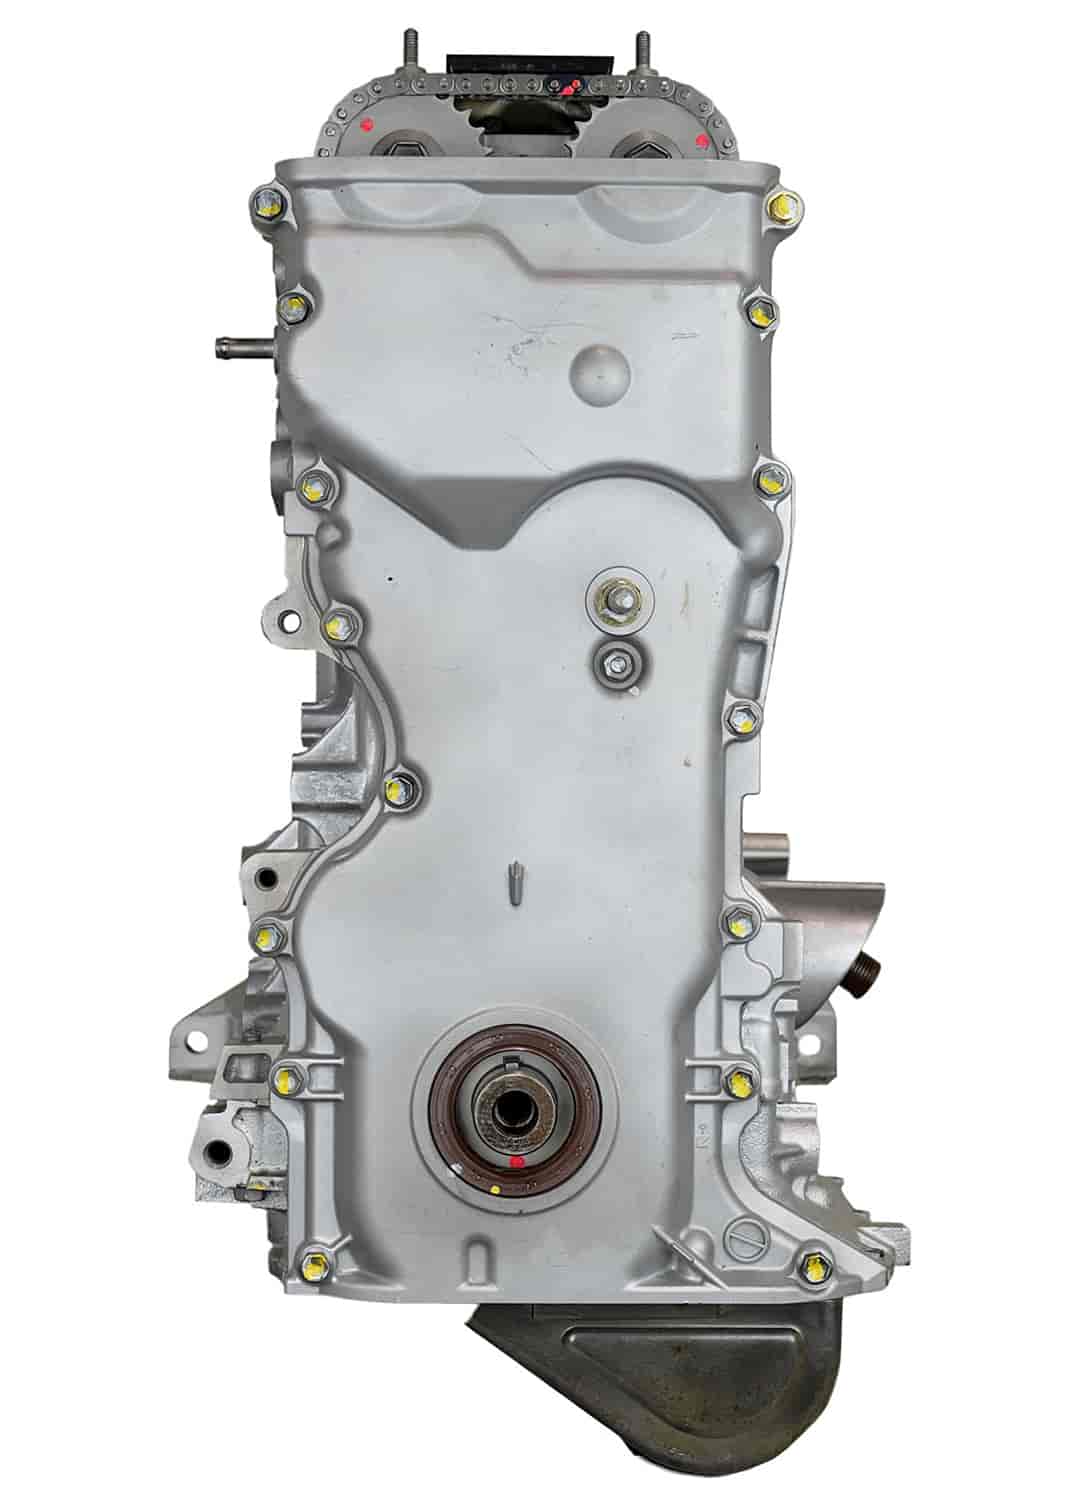 Remanufactured Crate Engine for 2007-2009 Suzuki SX4 with